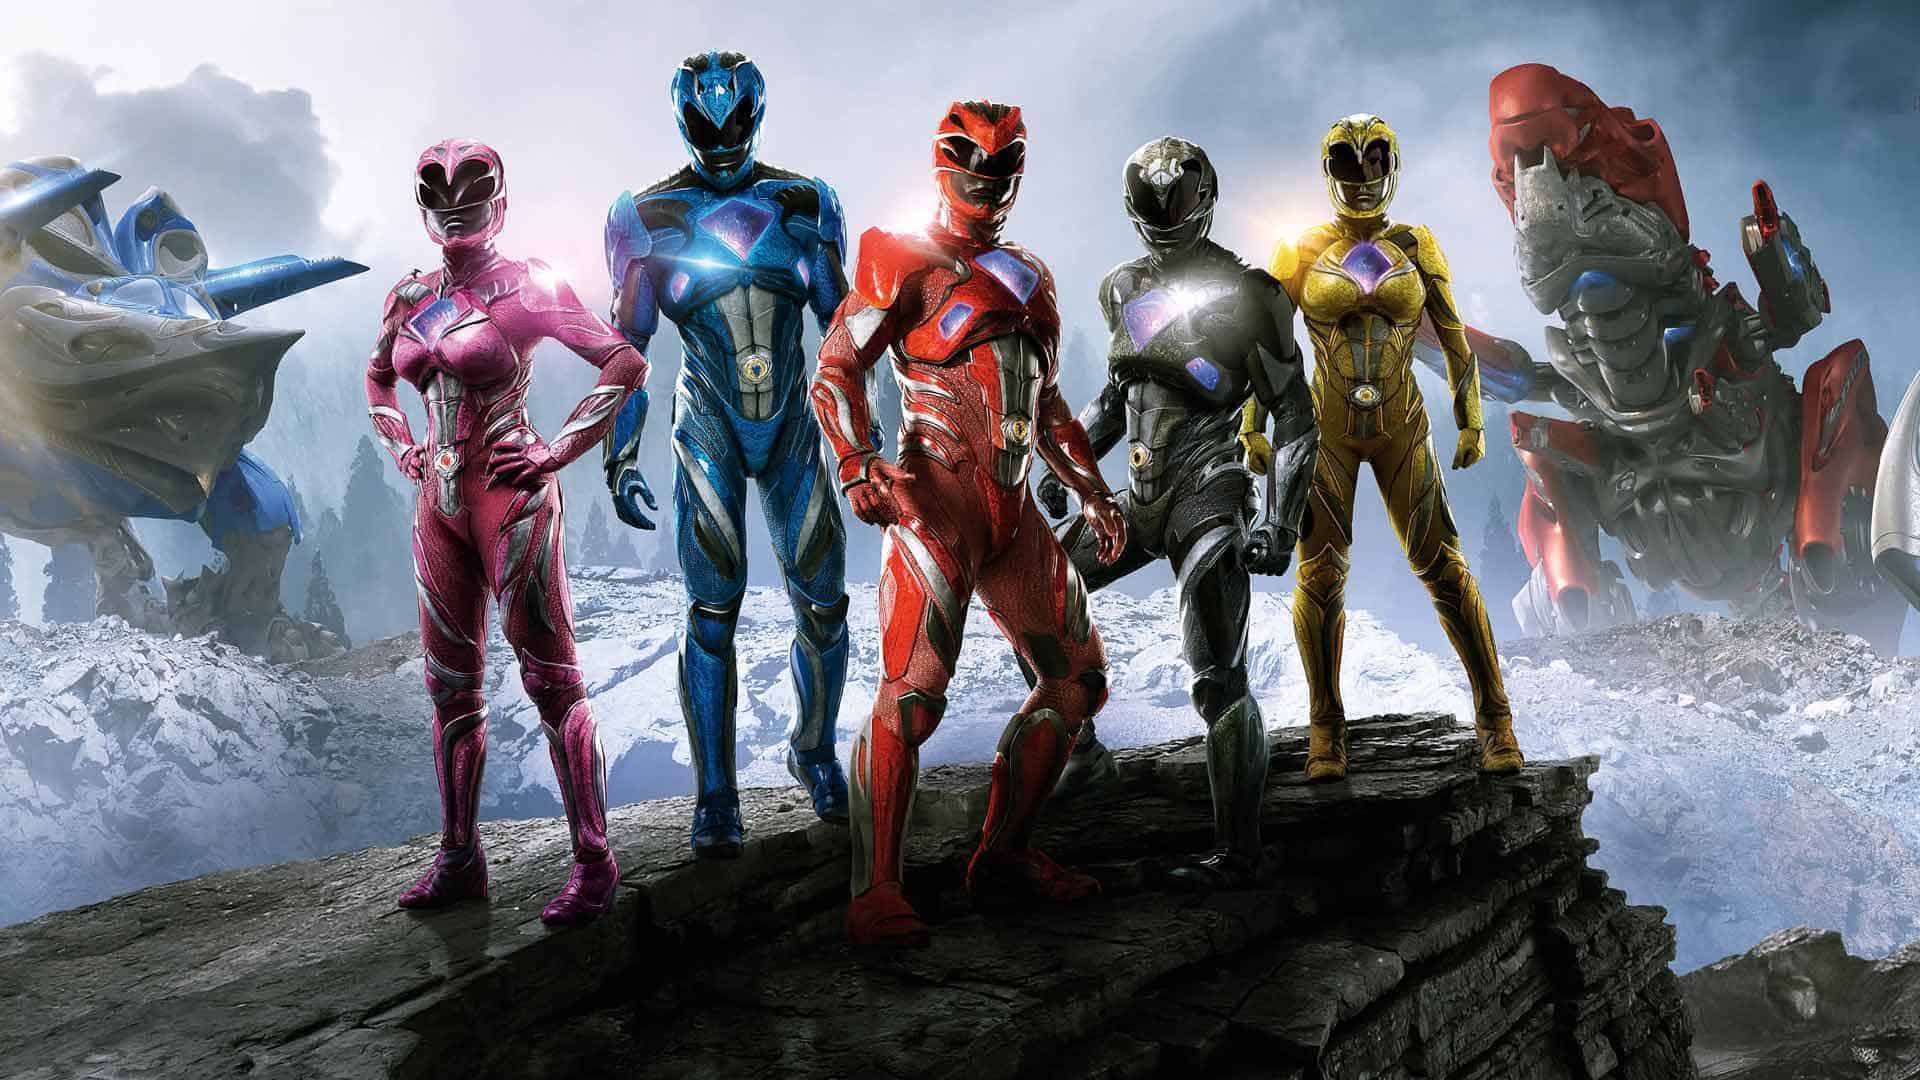 Power Rangers 2017 Costumes